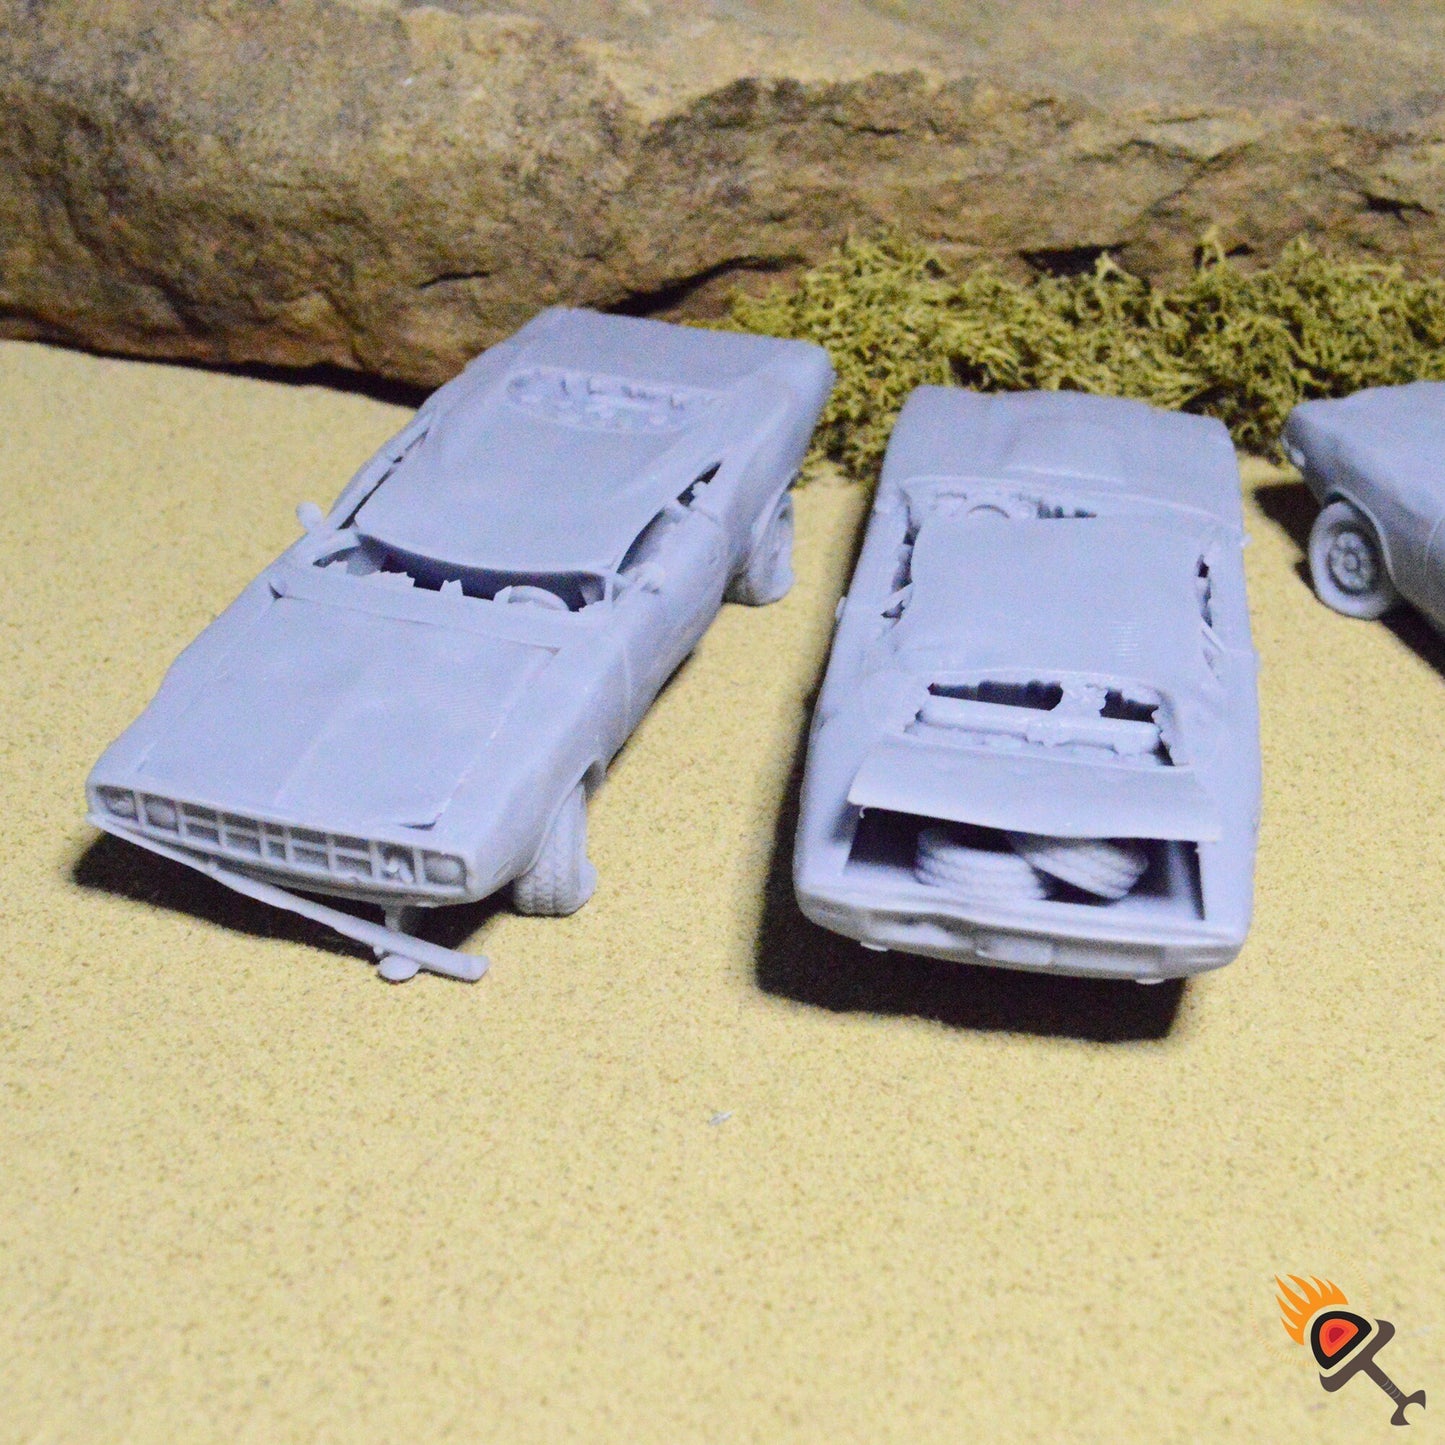 Miniature Scrapyard Cars 15mm 20mm 28mm 32mm for Gaslands Terrain, Fallout Wasteland Urban Post-Apocalyptic Junkyard Wrecked Cars